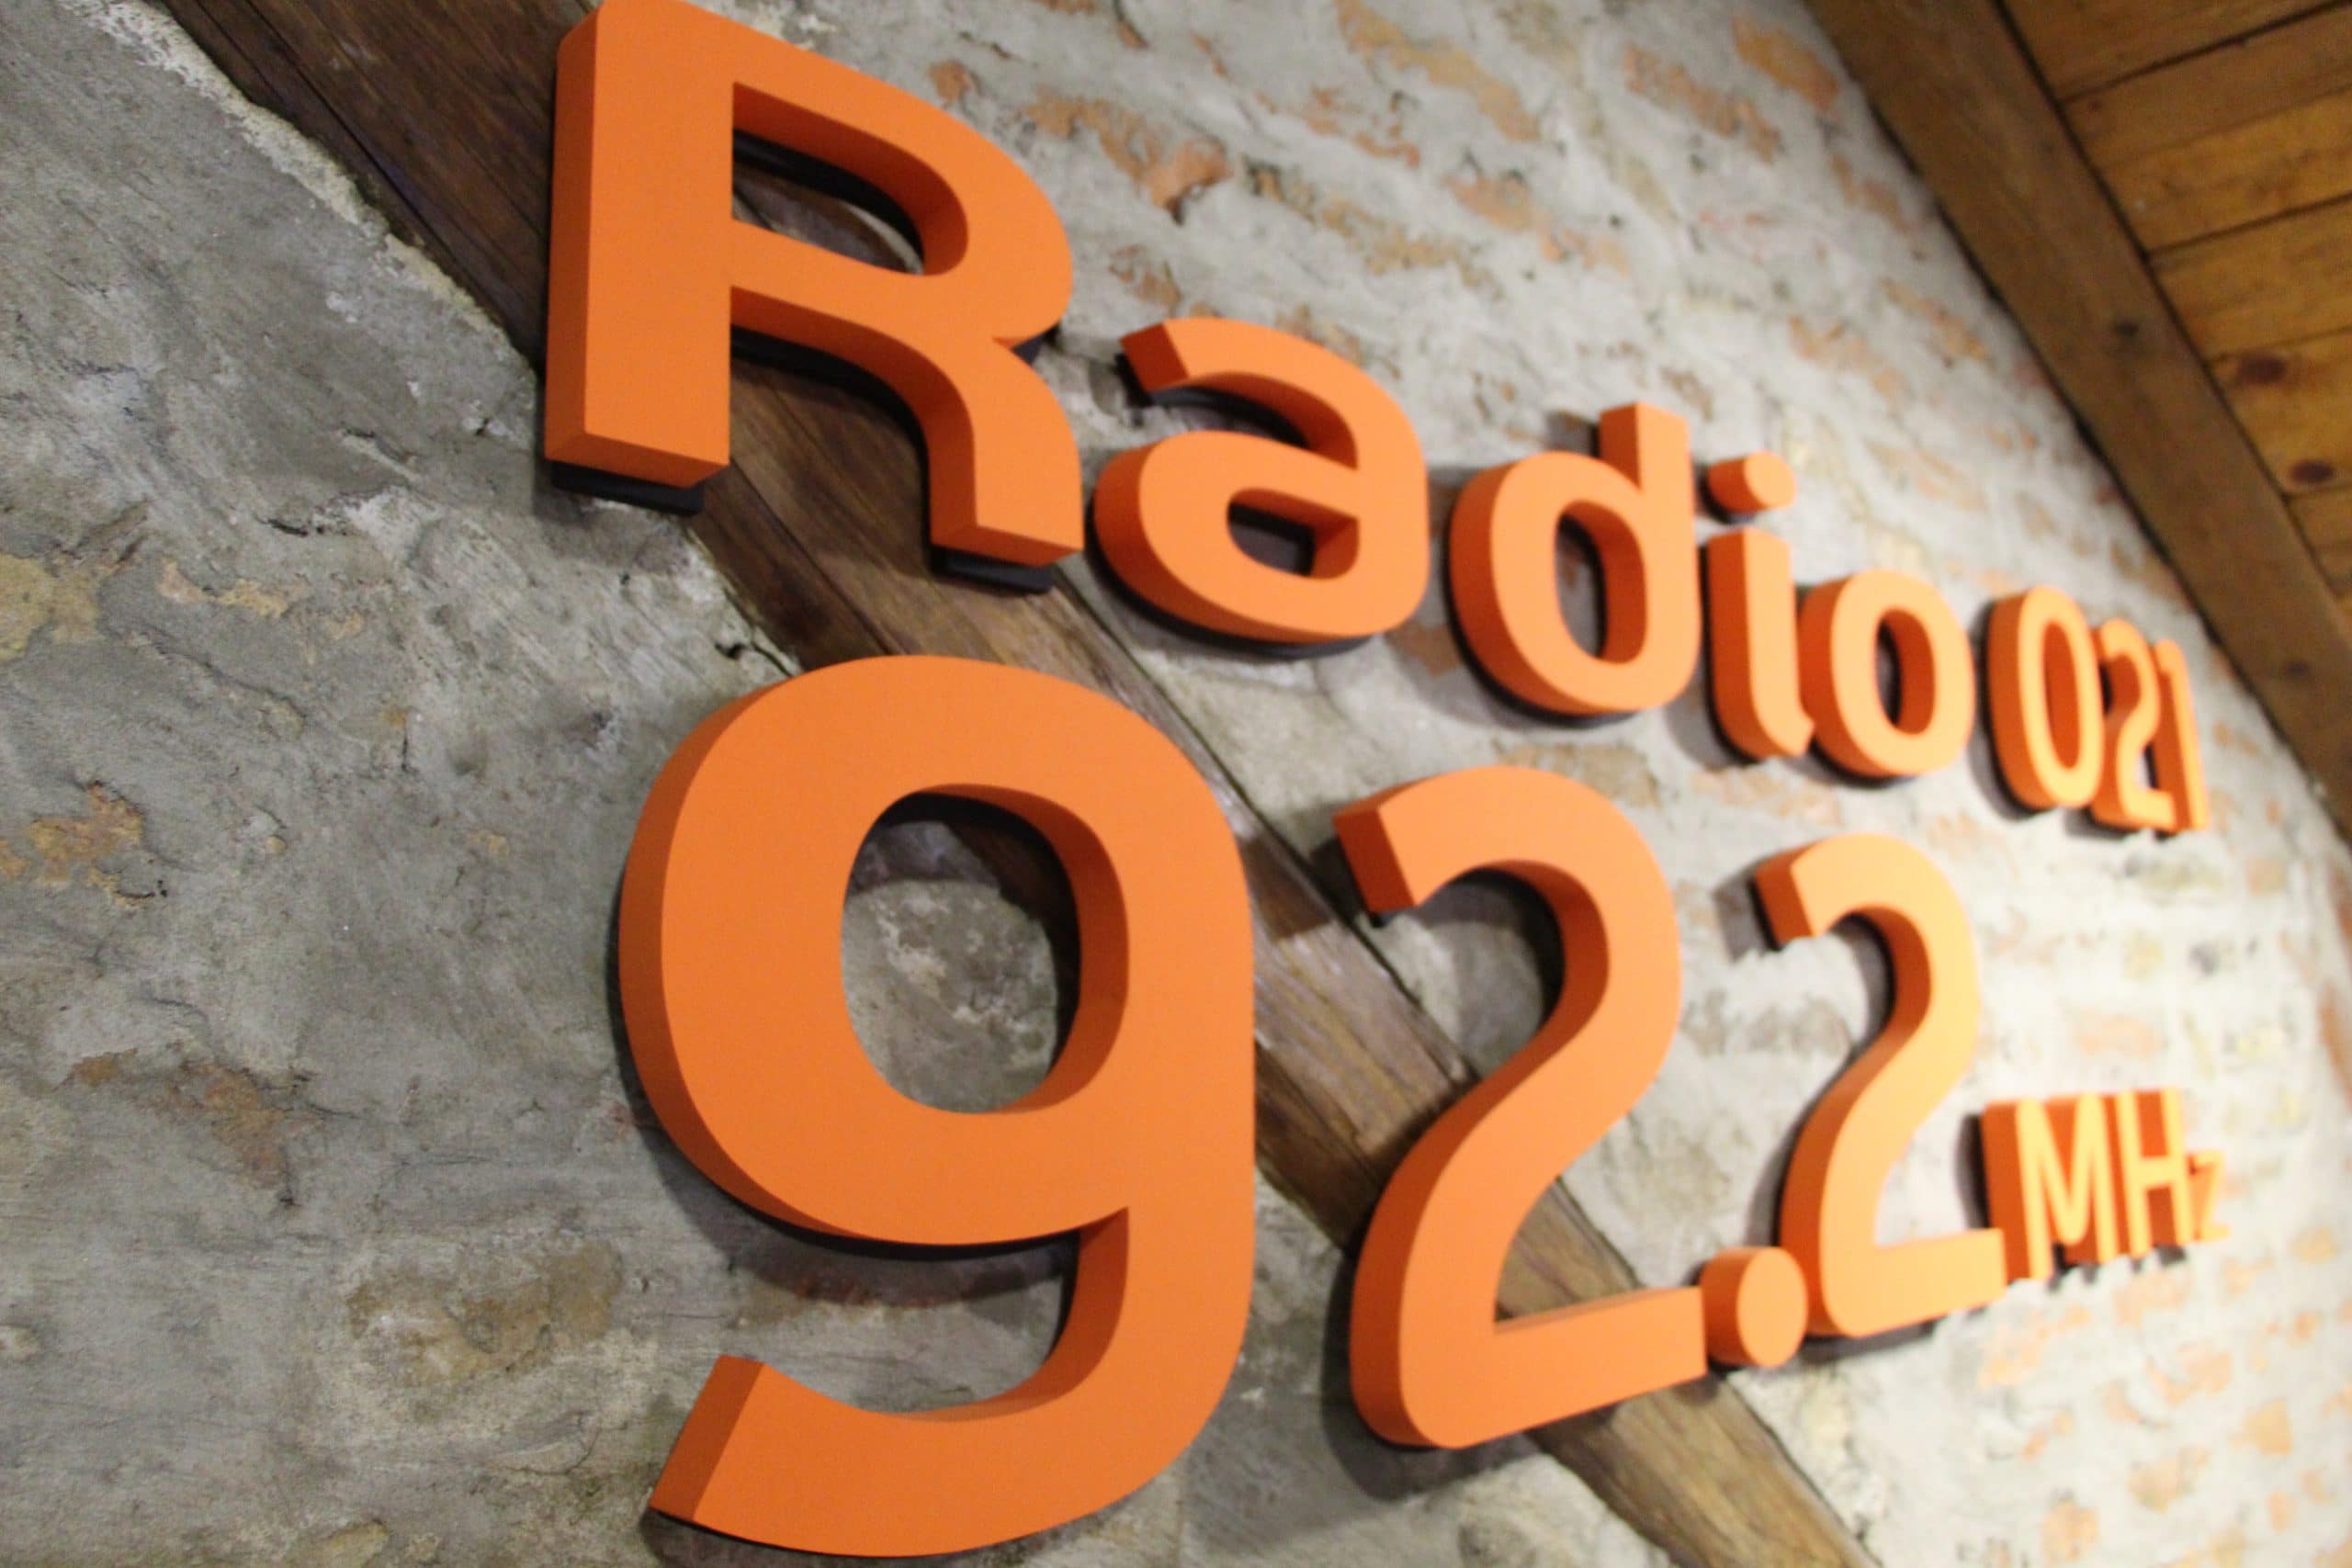 Radio 021 rođendan proslavlja pokretanjem gift shop-a "ShopiNS" 1